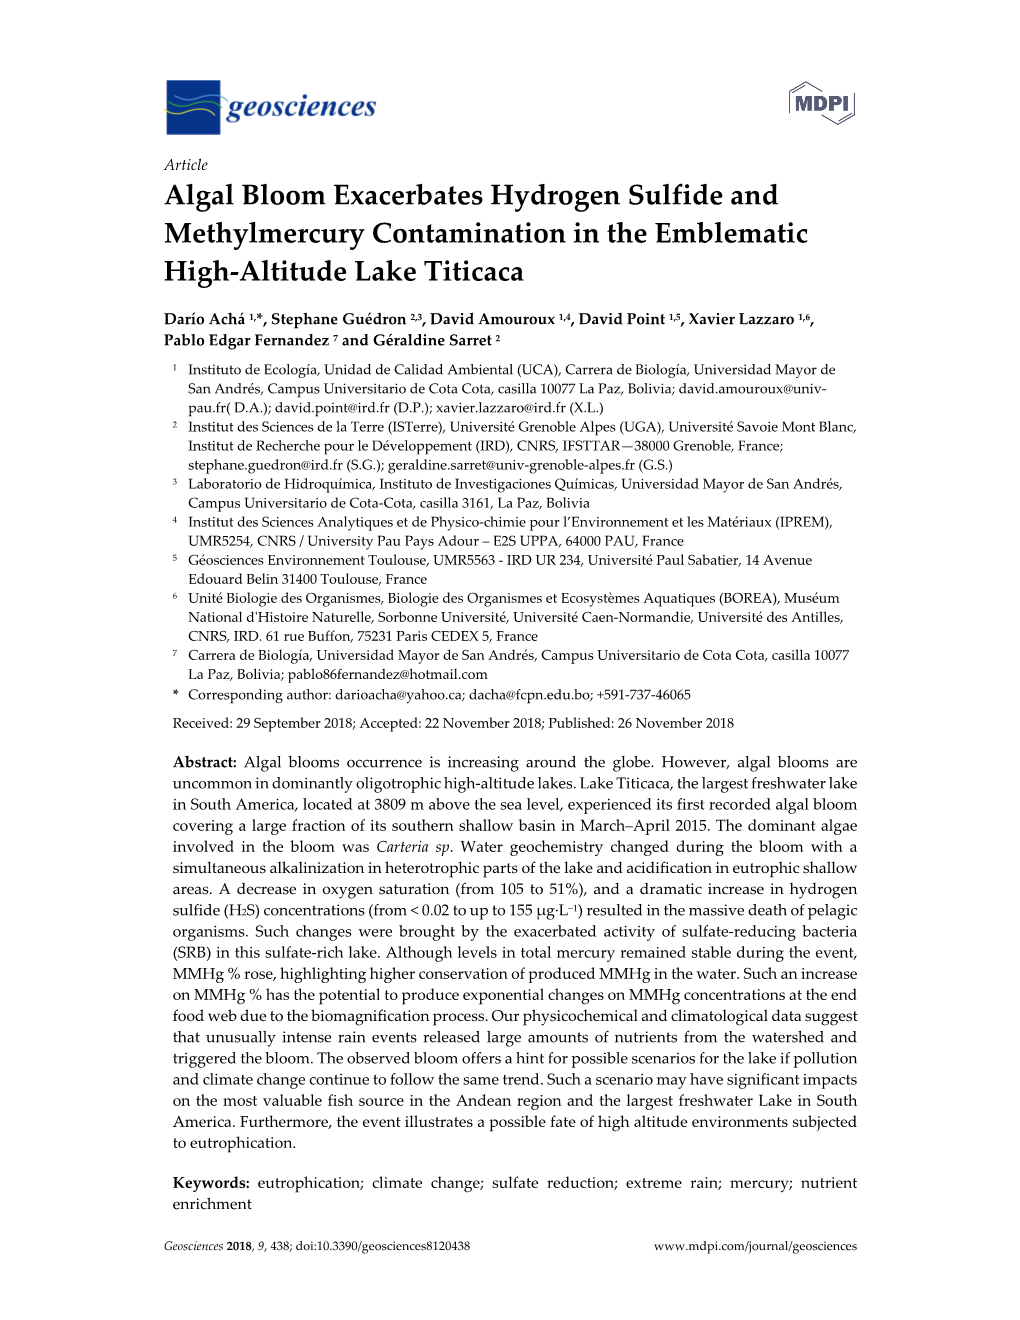 Algal Bloom Exacerbates Hydrogen Sulfide and Methylmercury Contamination in the Emblematic High-Altitude Lake Titicaca